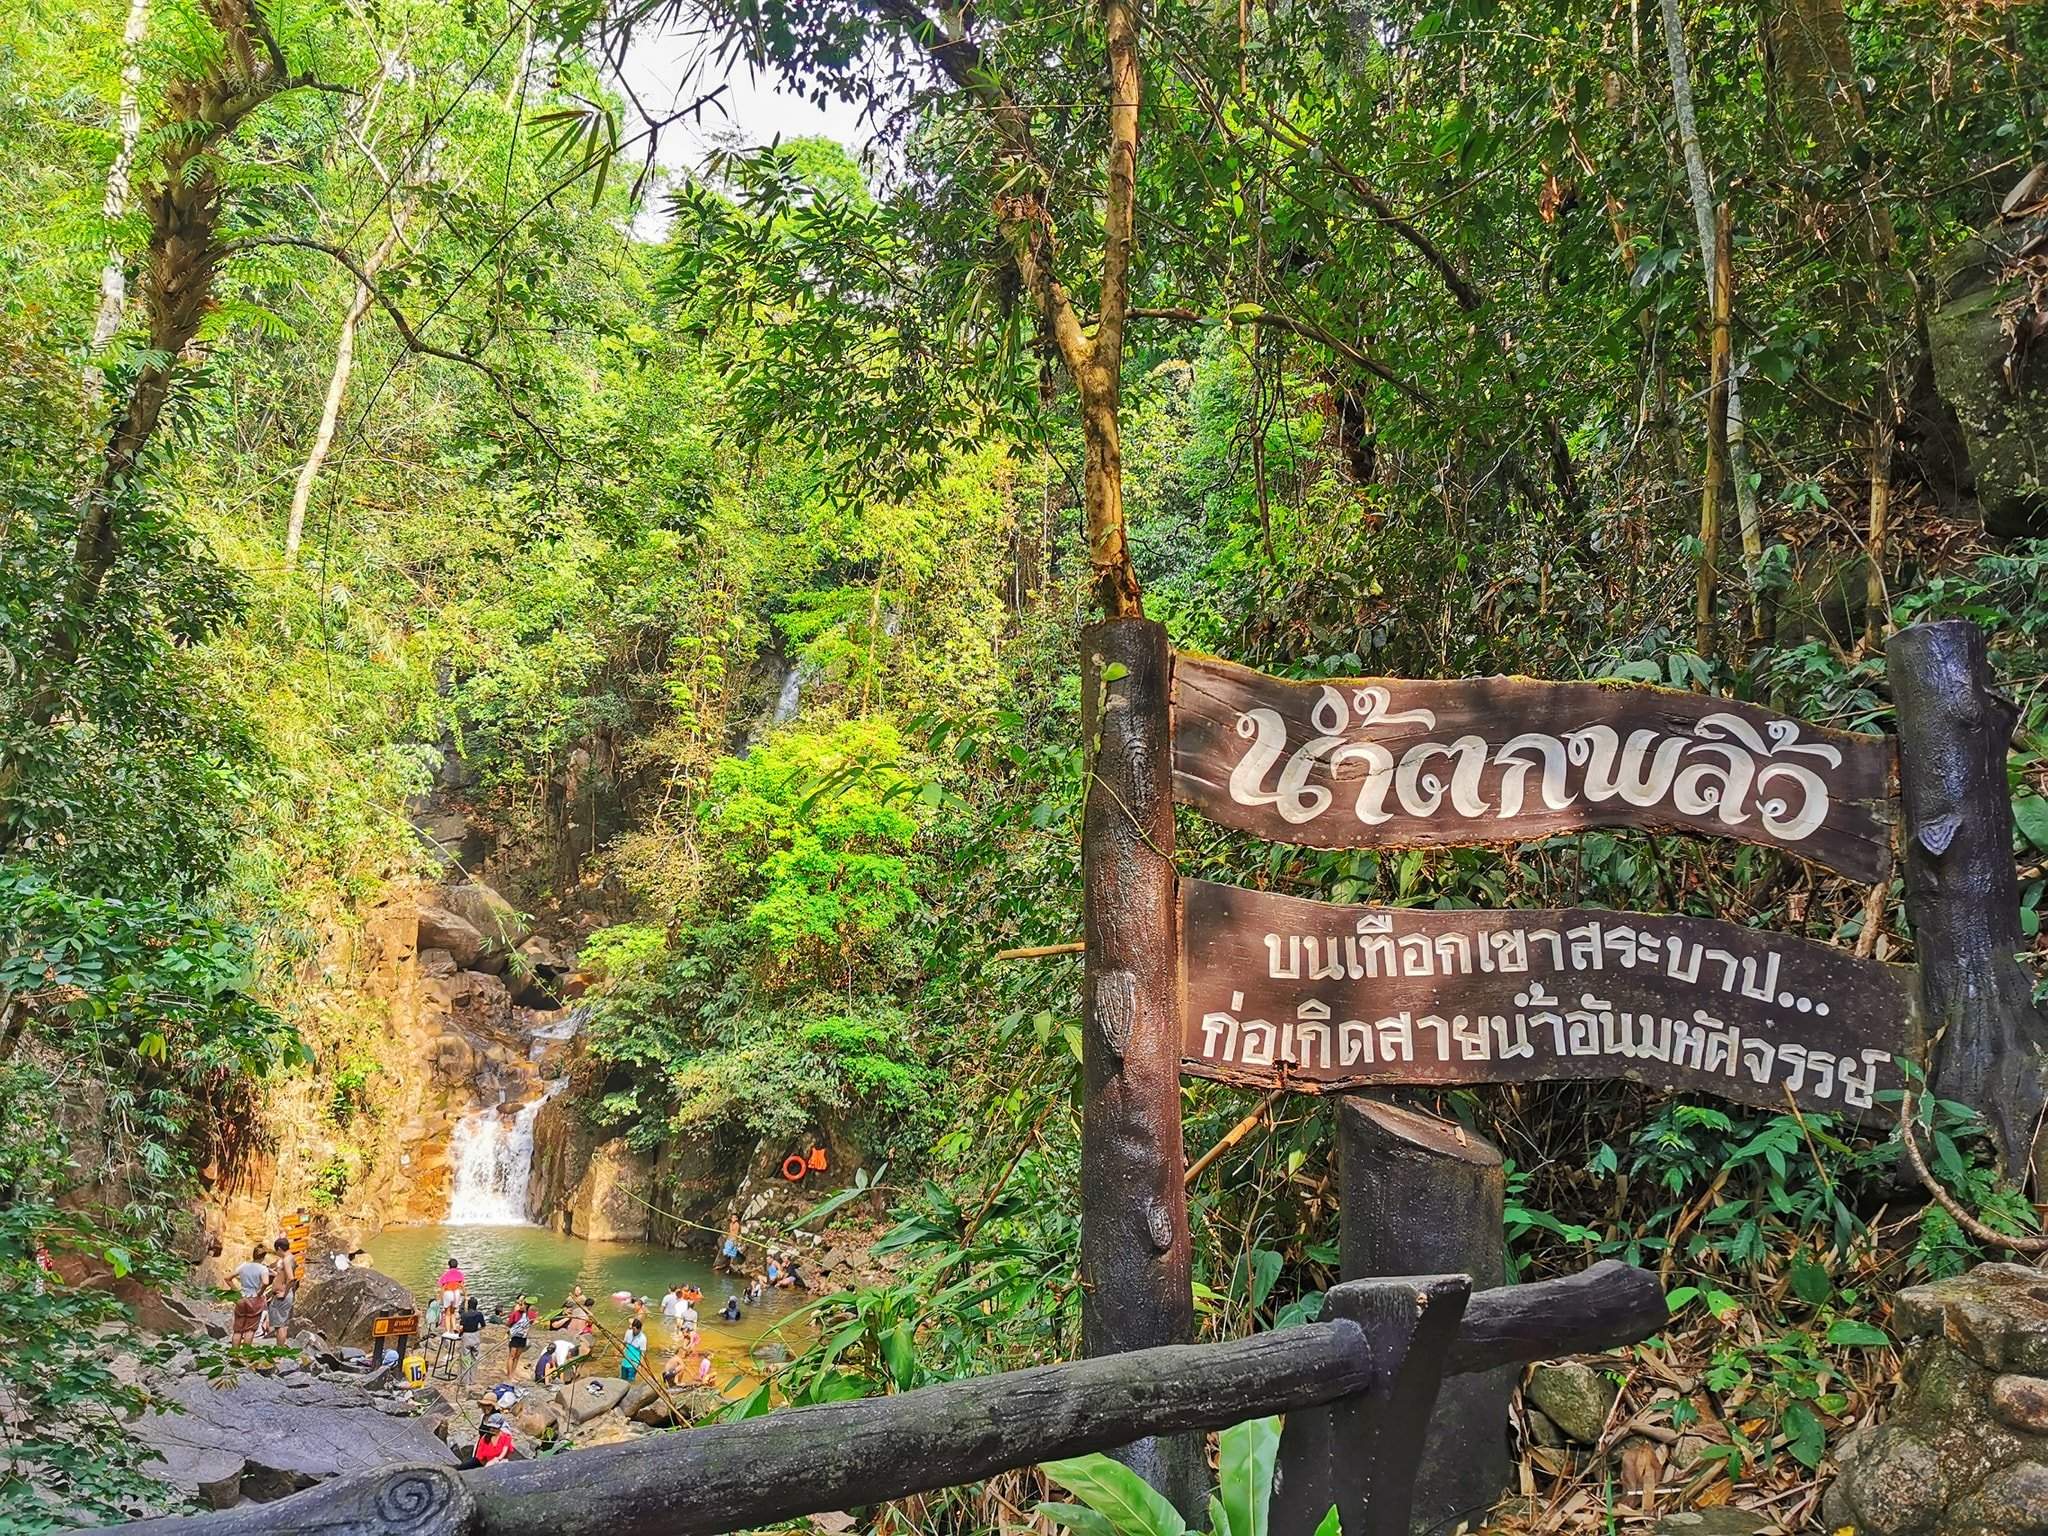 Namtok Phliu National Park